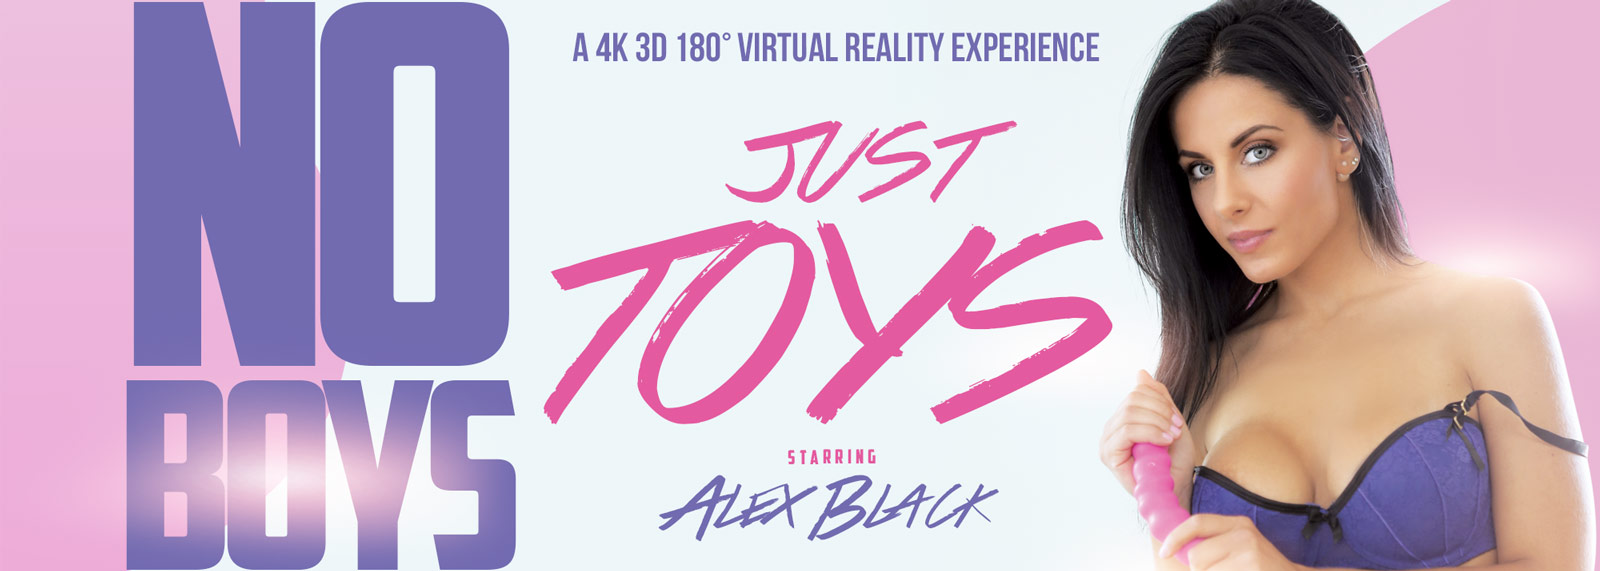 No Boys Just Toys - VR Porn Video, Starring: Alex Black